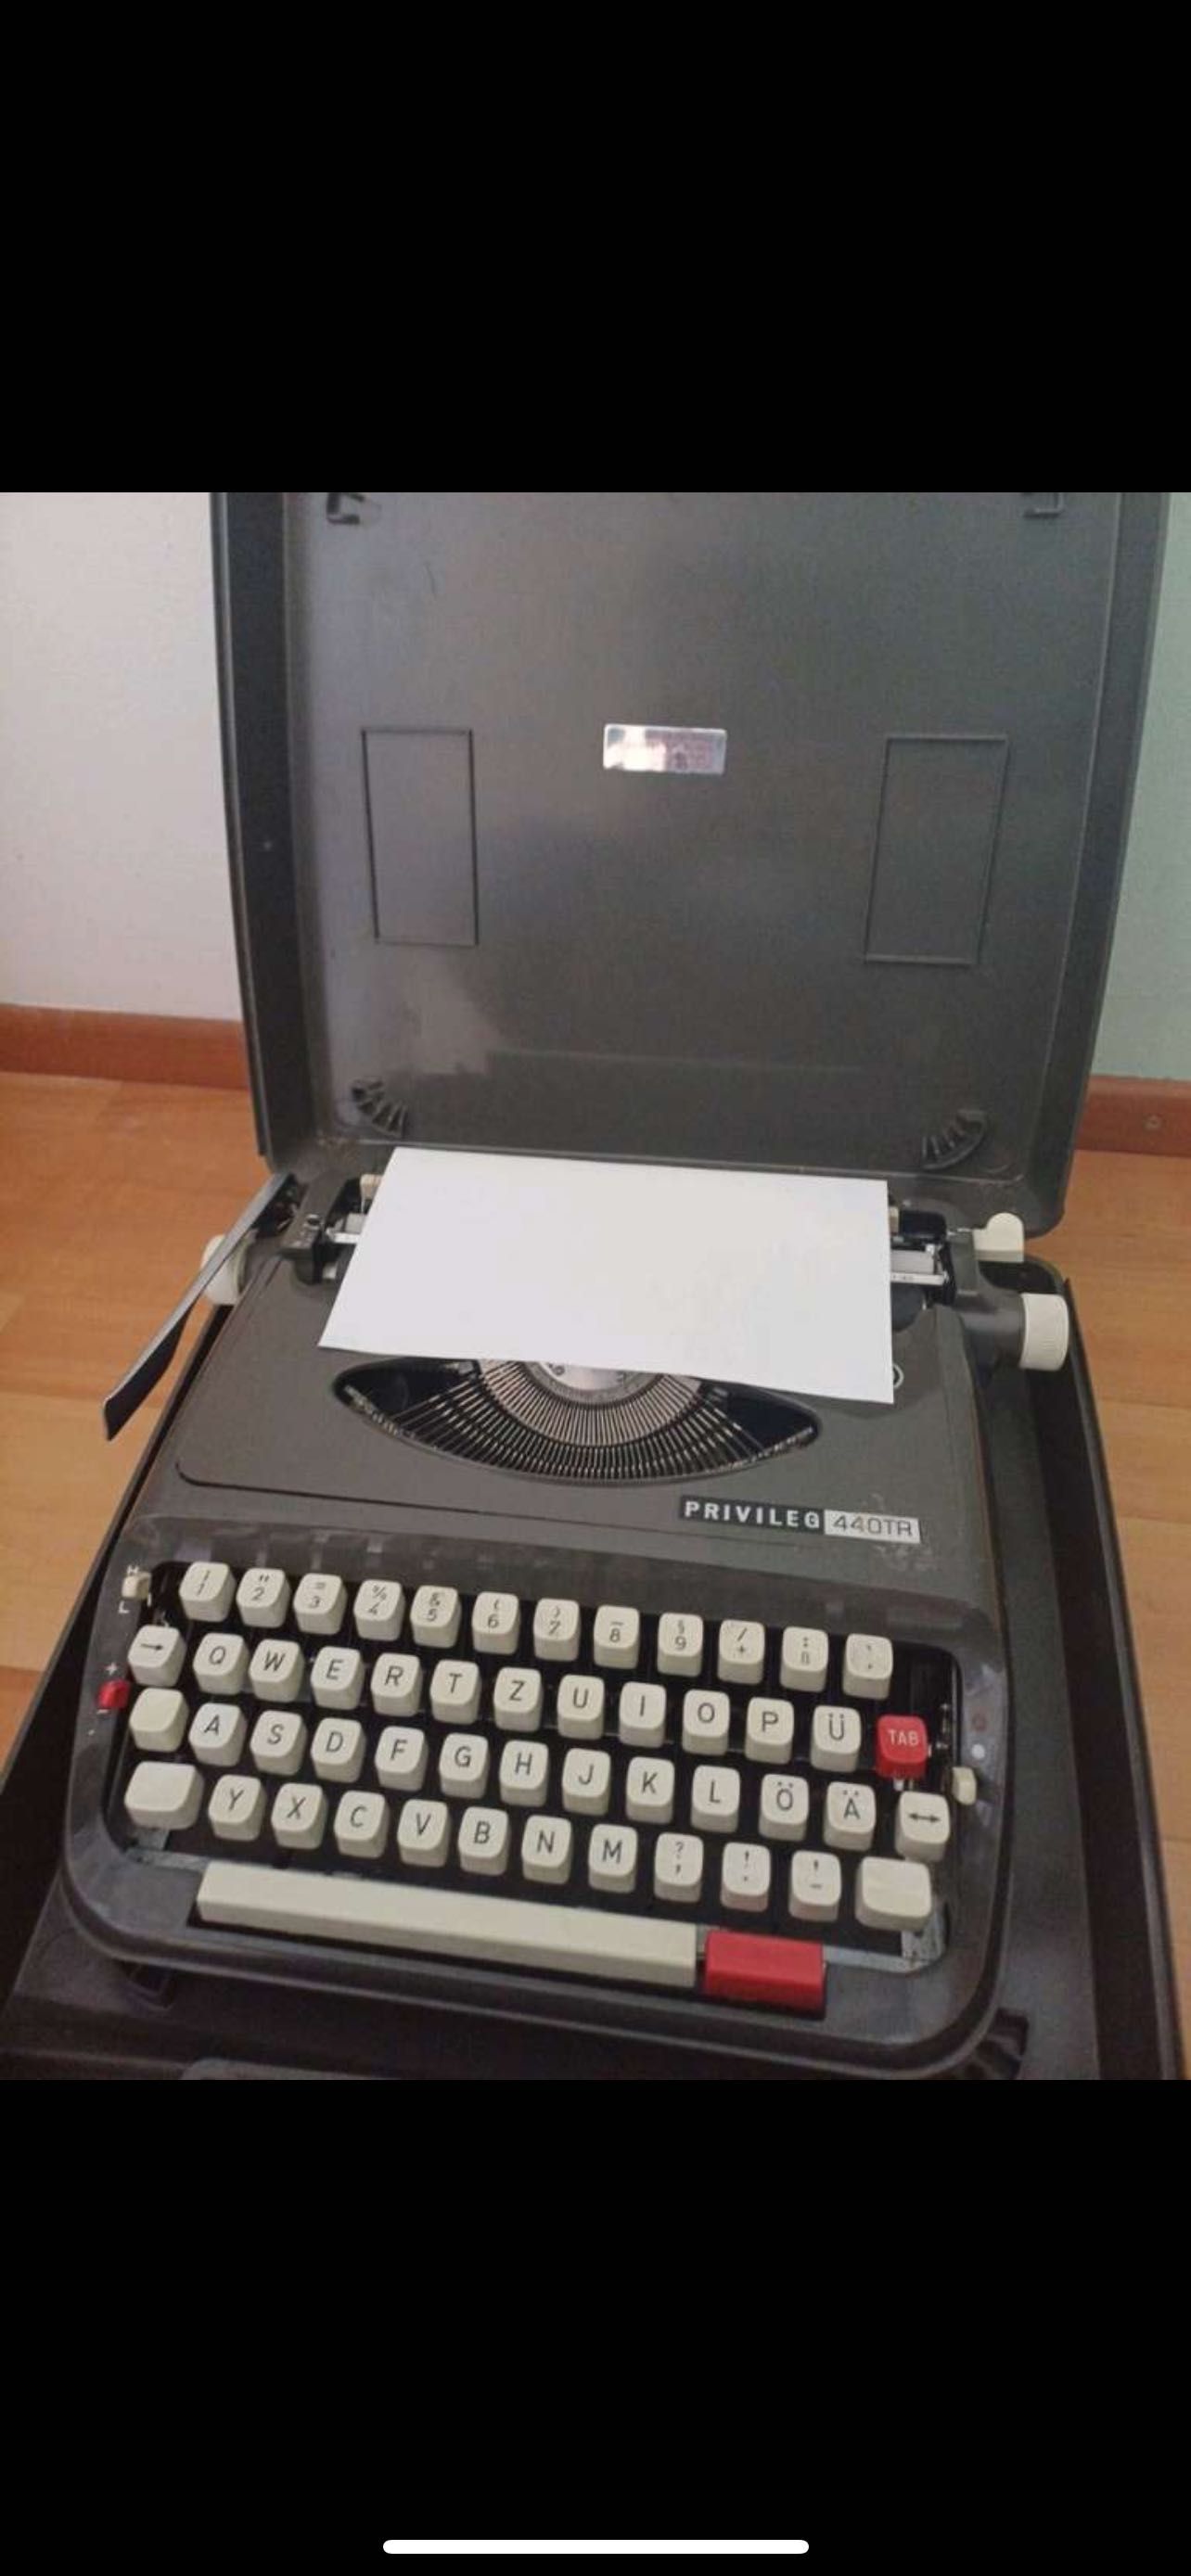 Mașina de scris privileg 440 tr